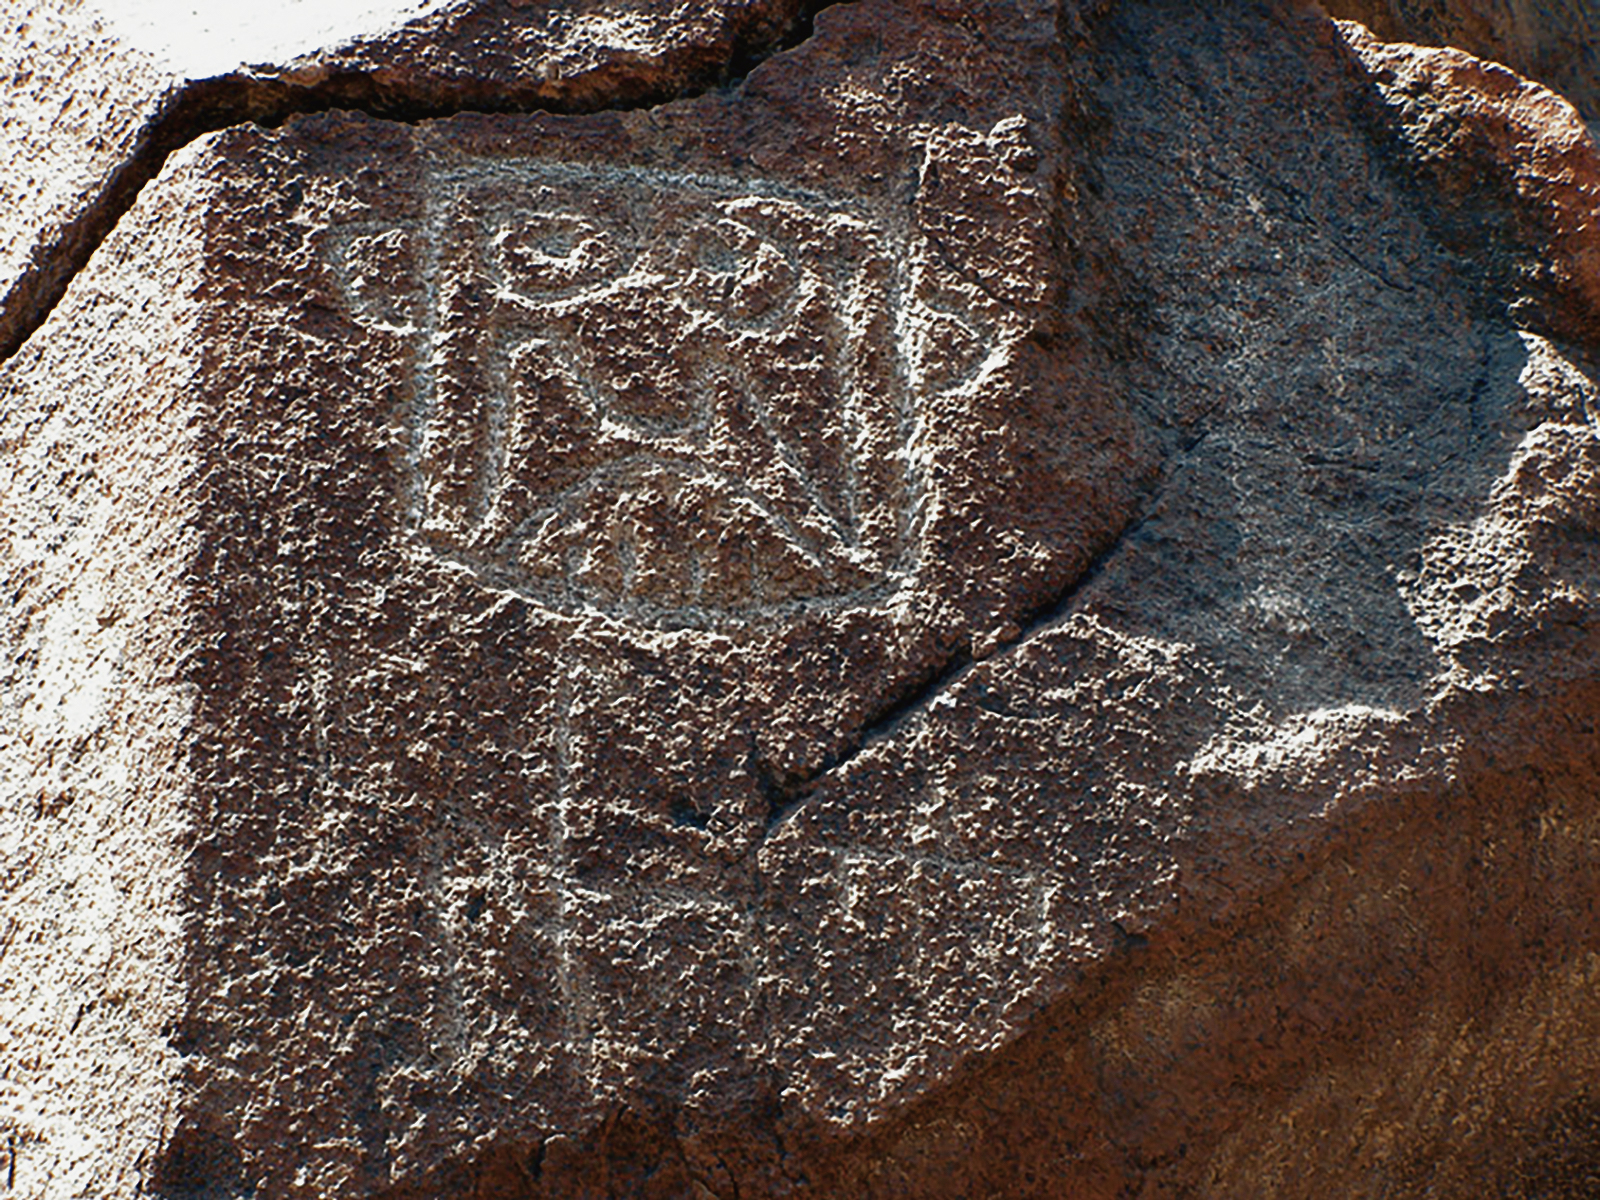 Petroglyph Rock Art Checta Peru